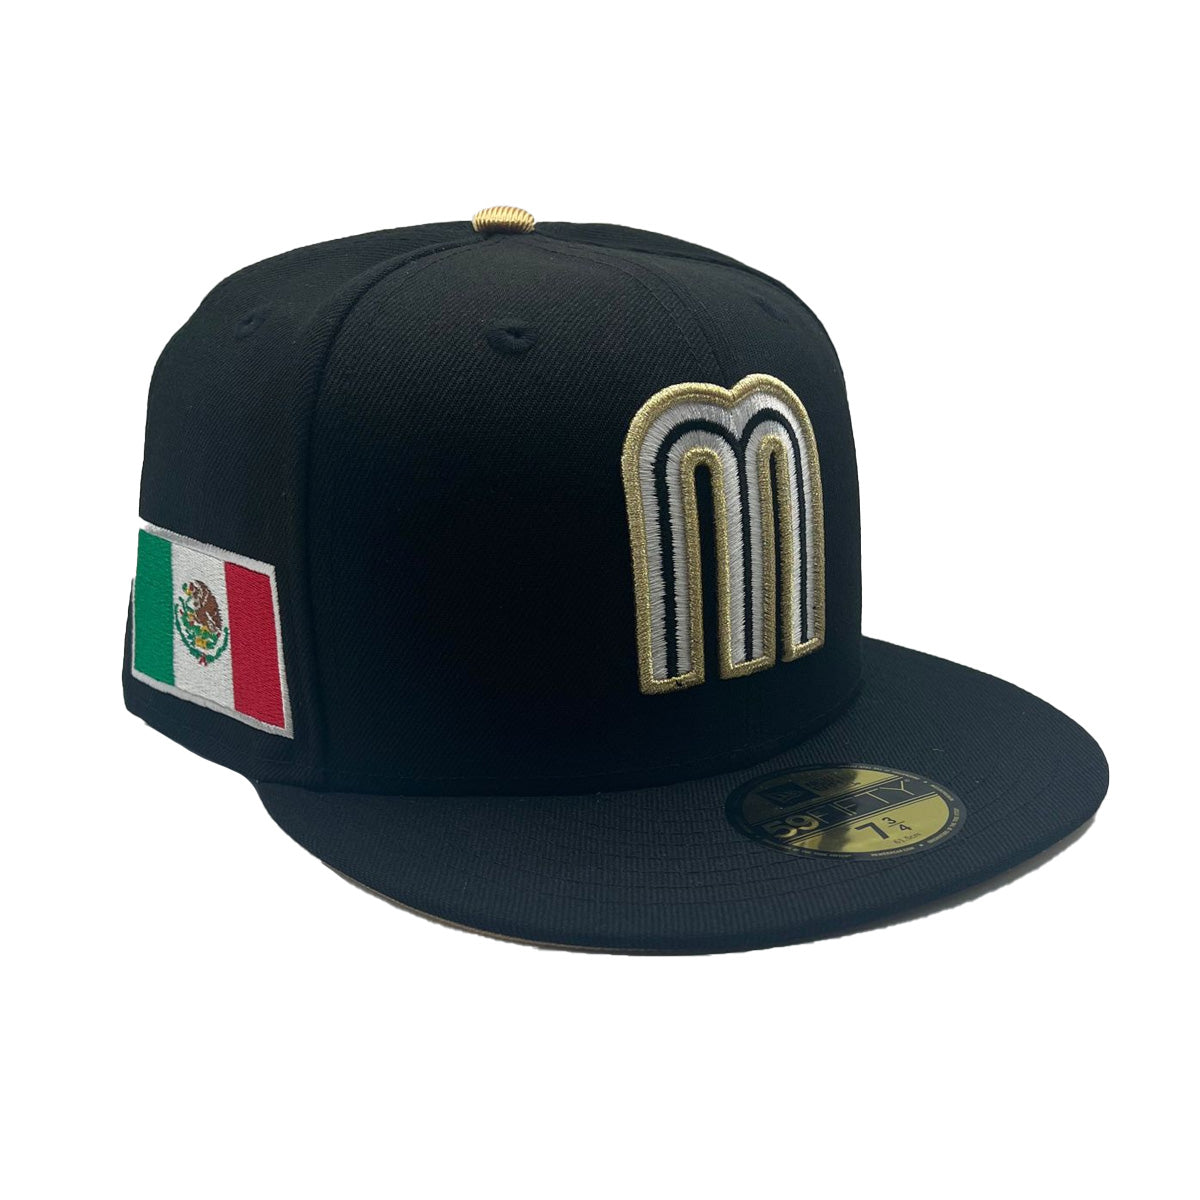 New Era 9FIFTY Mexico World Baseball Classic Snapback Hat Black Red